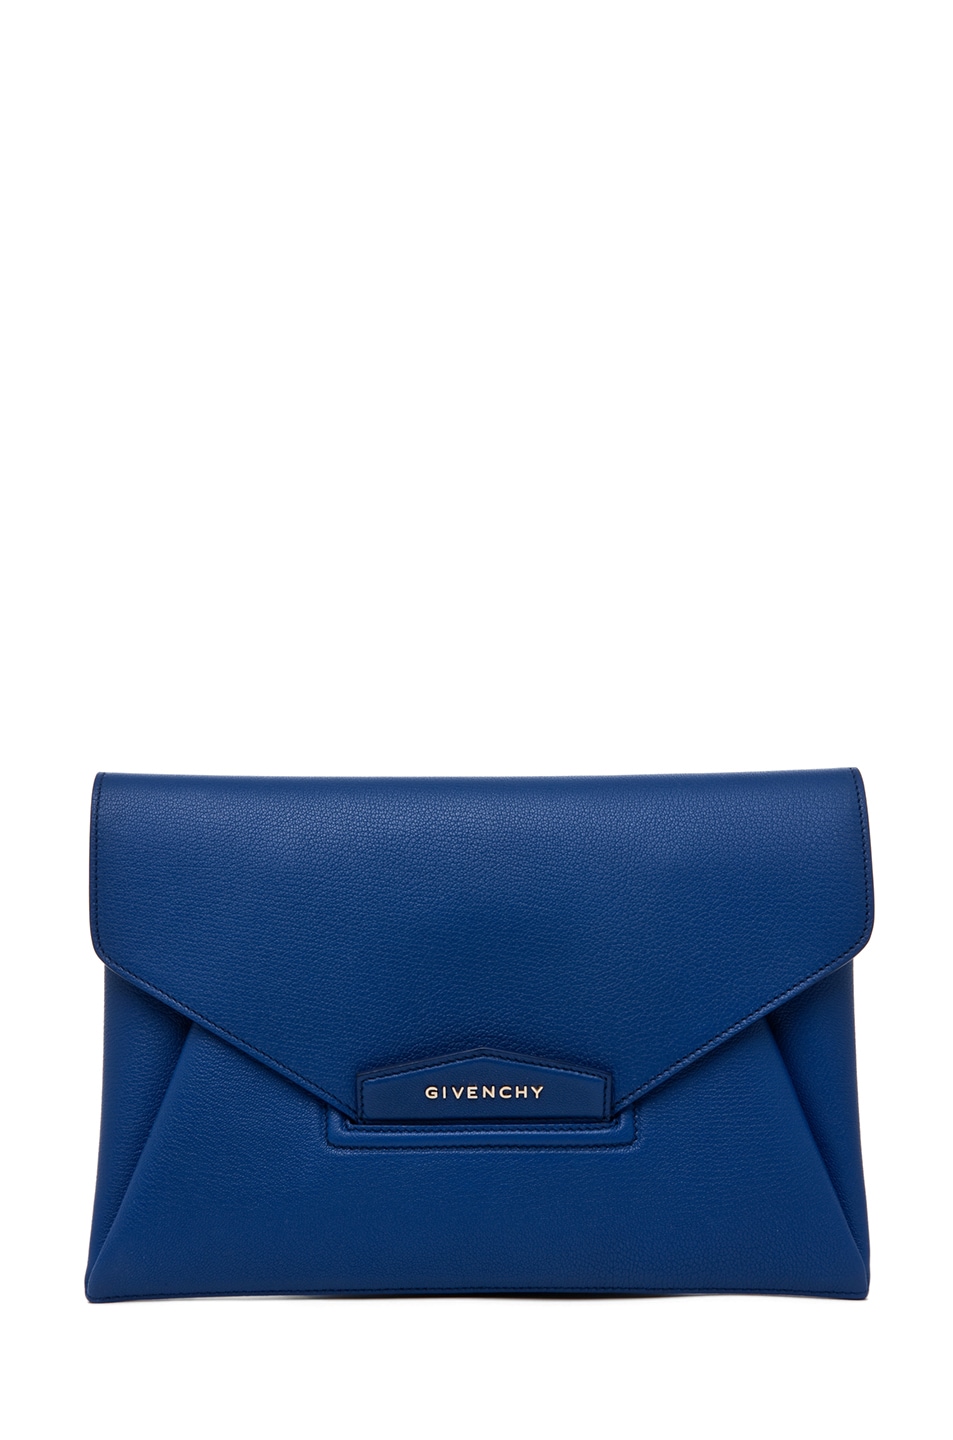 Image 1 of Givenchy Antigona Envelope Clutch in Moroccan Blue